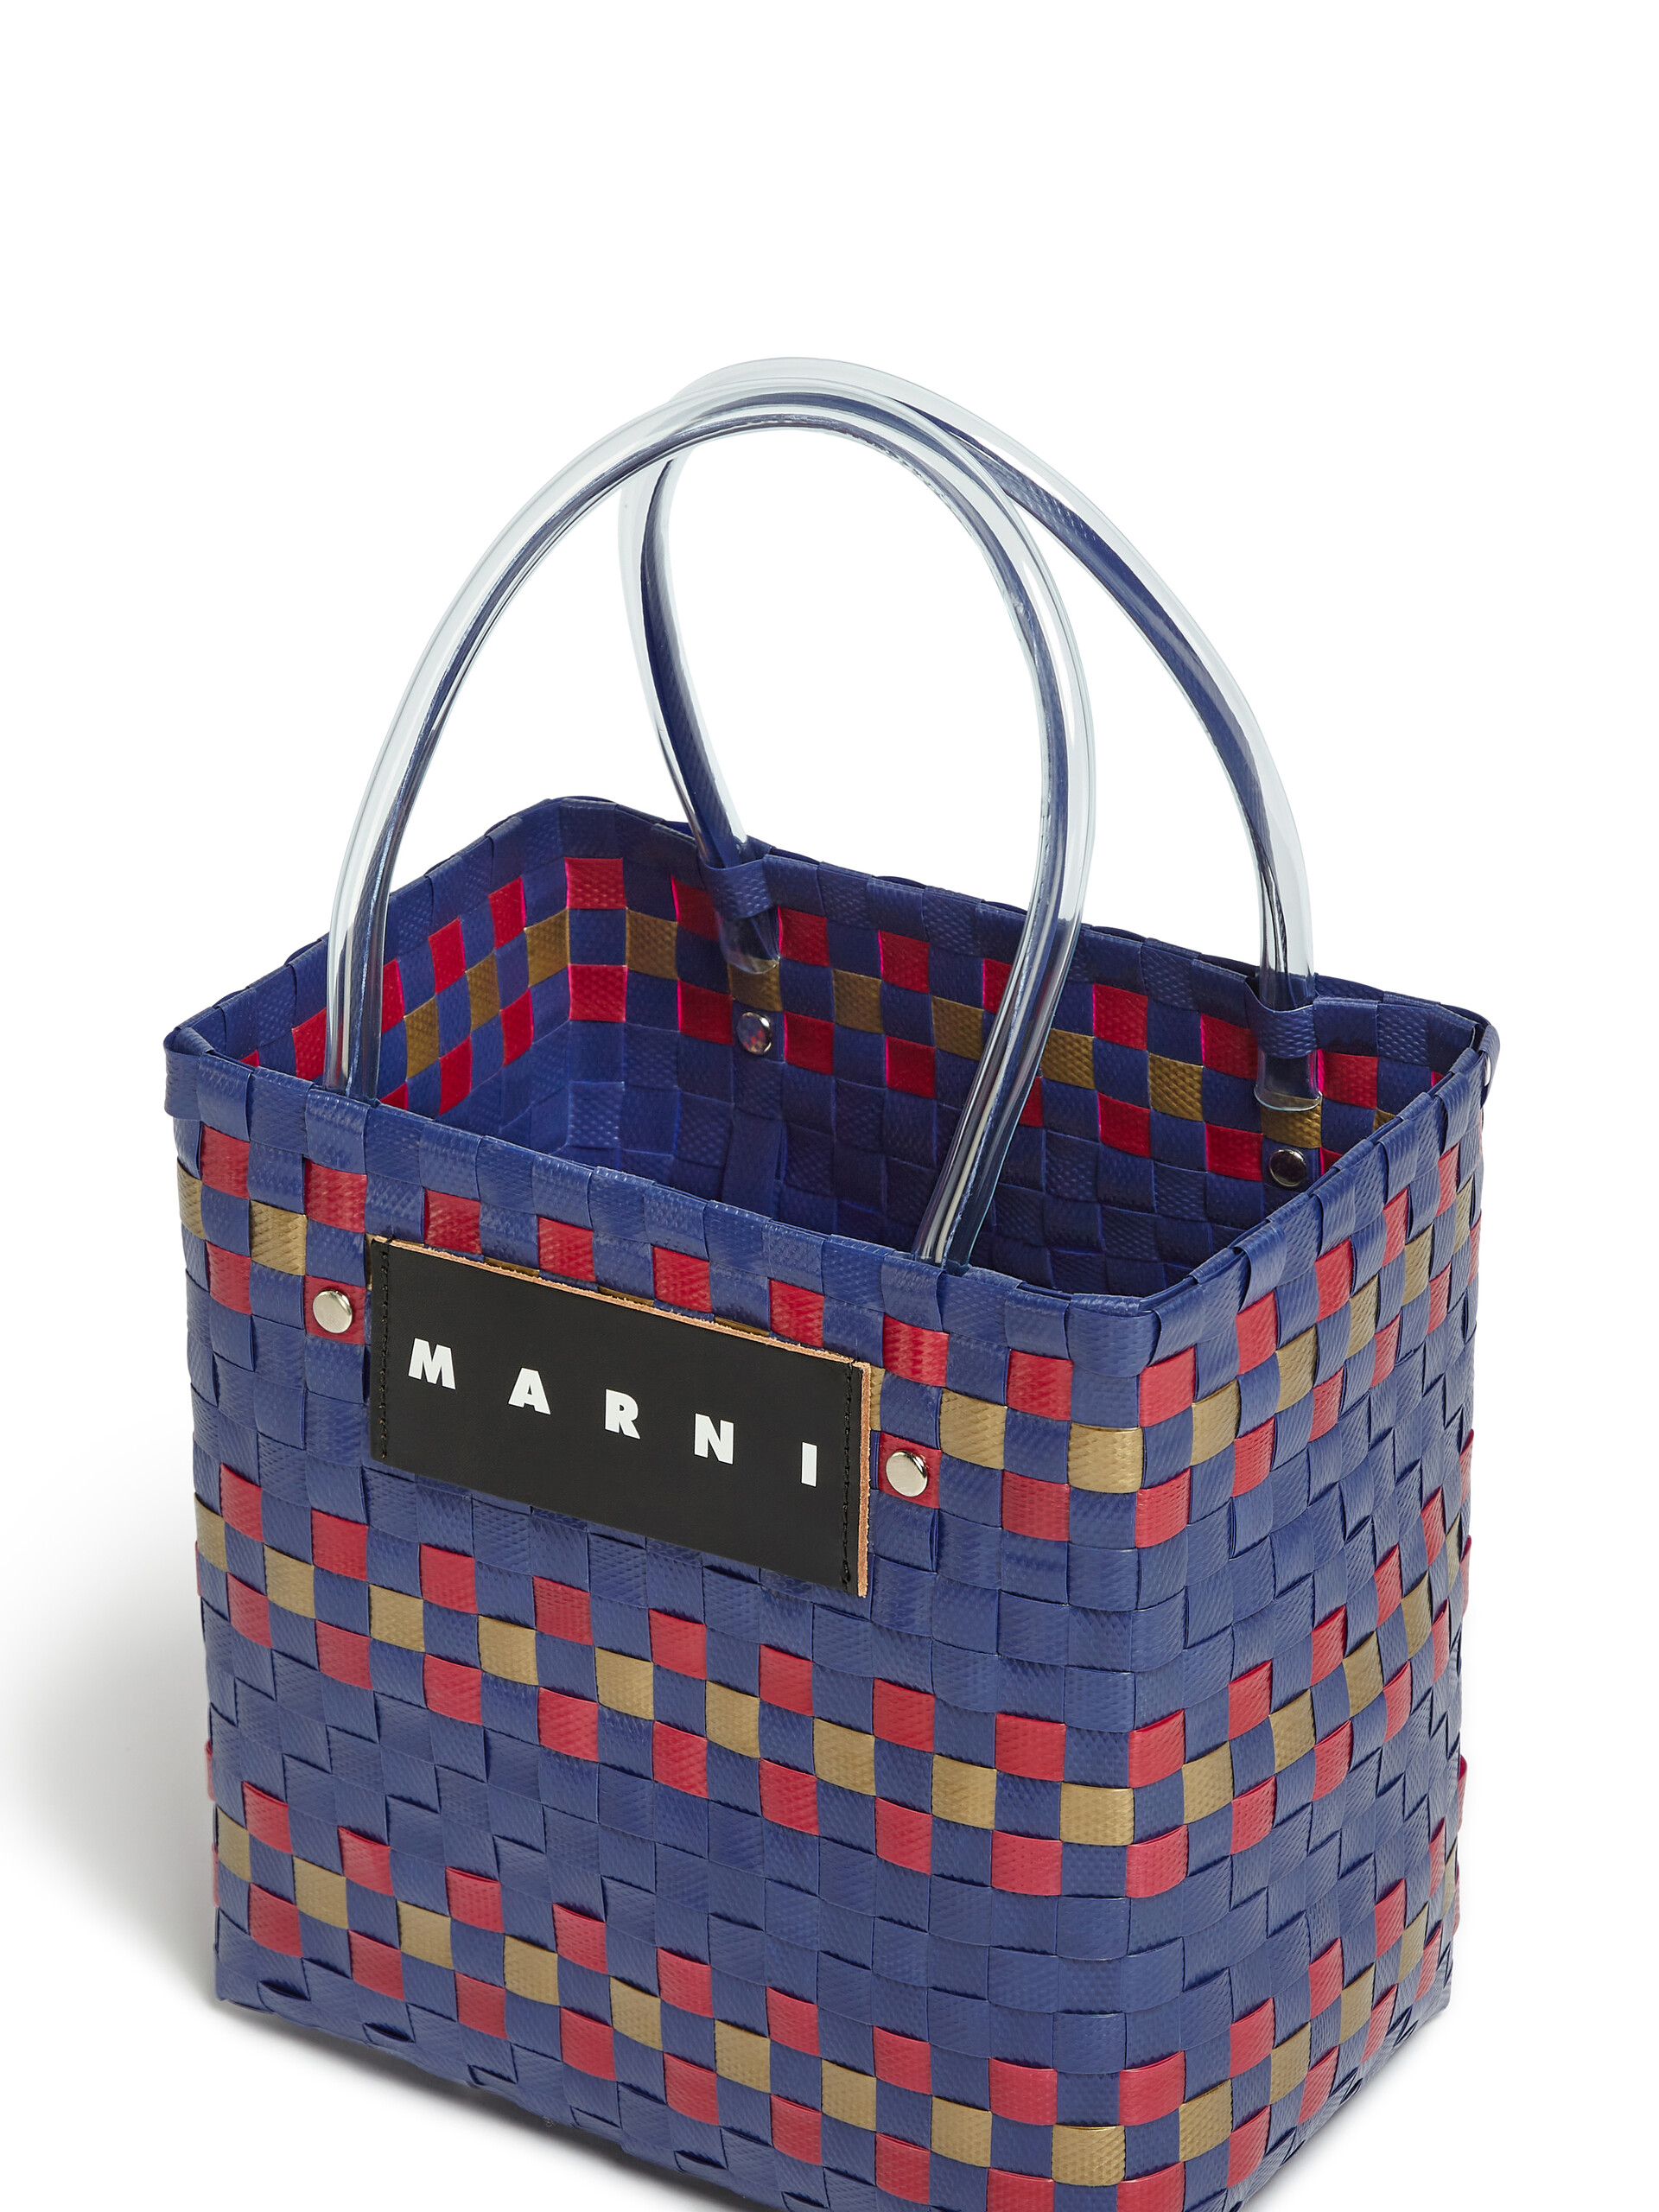 MARNI MARKET BASKET bag in blue woven material - Bags - Image 4